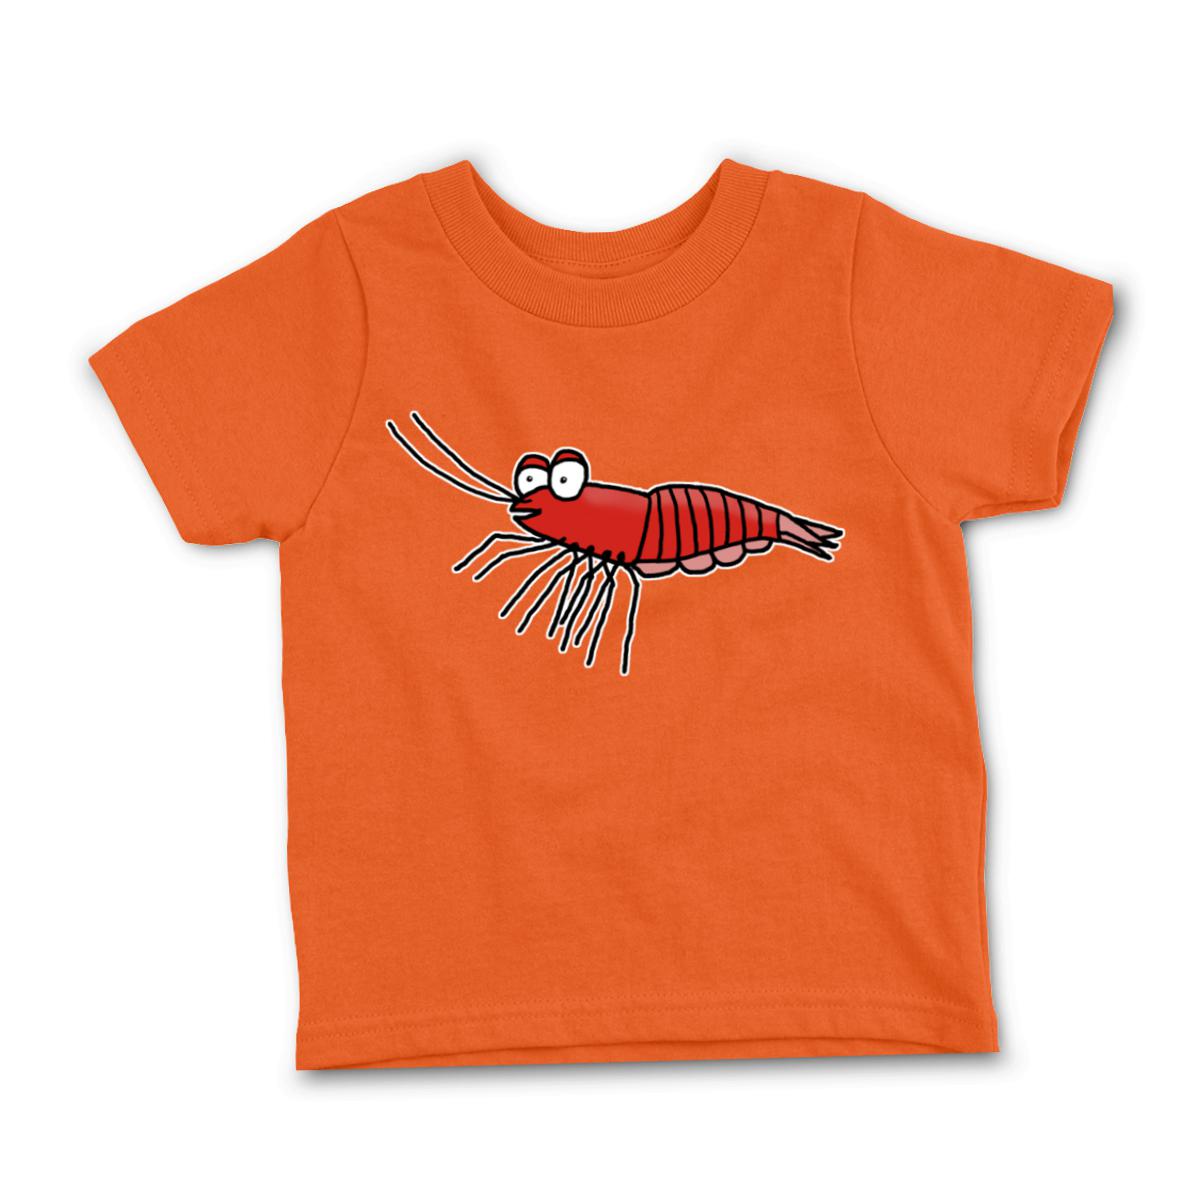 Shrimp Toddler Tee 56T orange